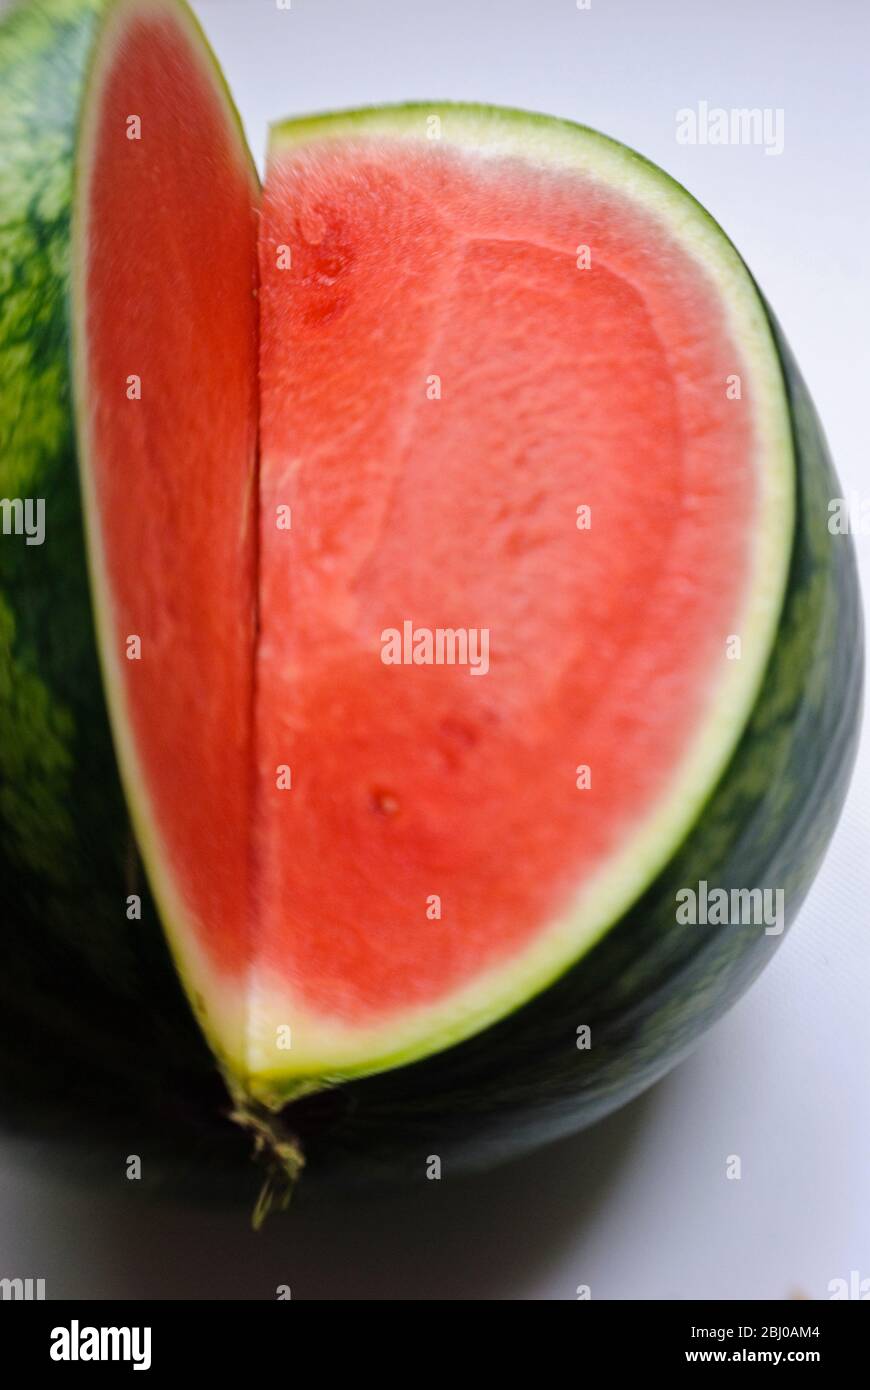 Cut watermelon showing red inside flesh - Stock Photo